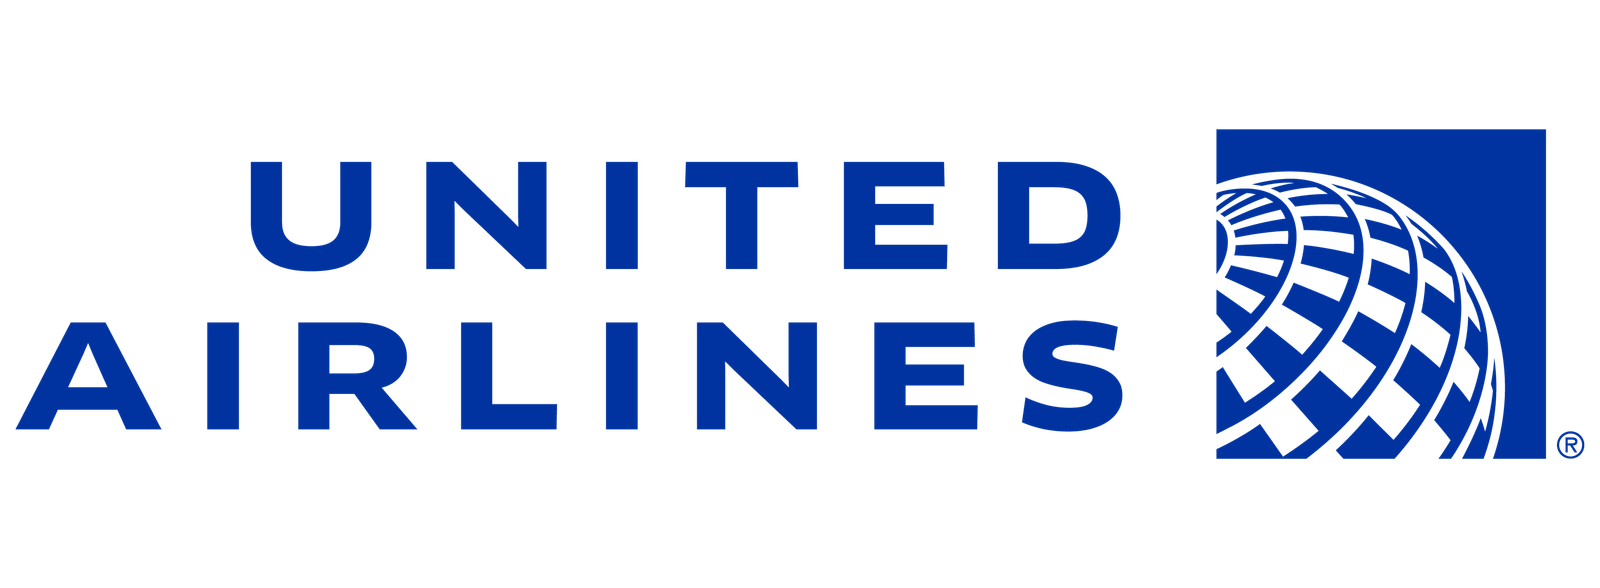 UNITED AIRLINE SAMPLE 1